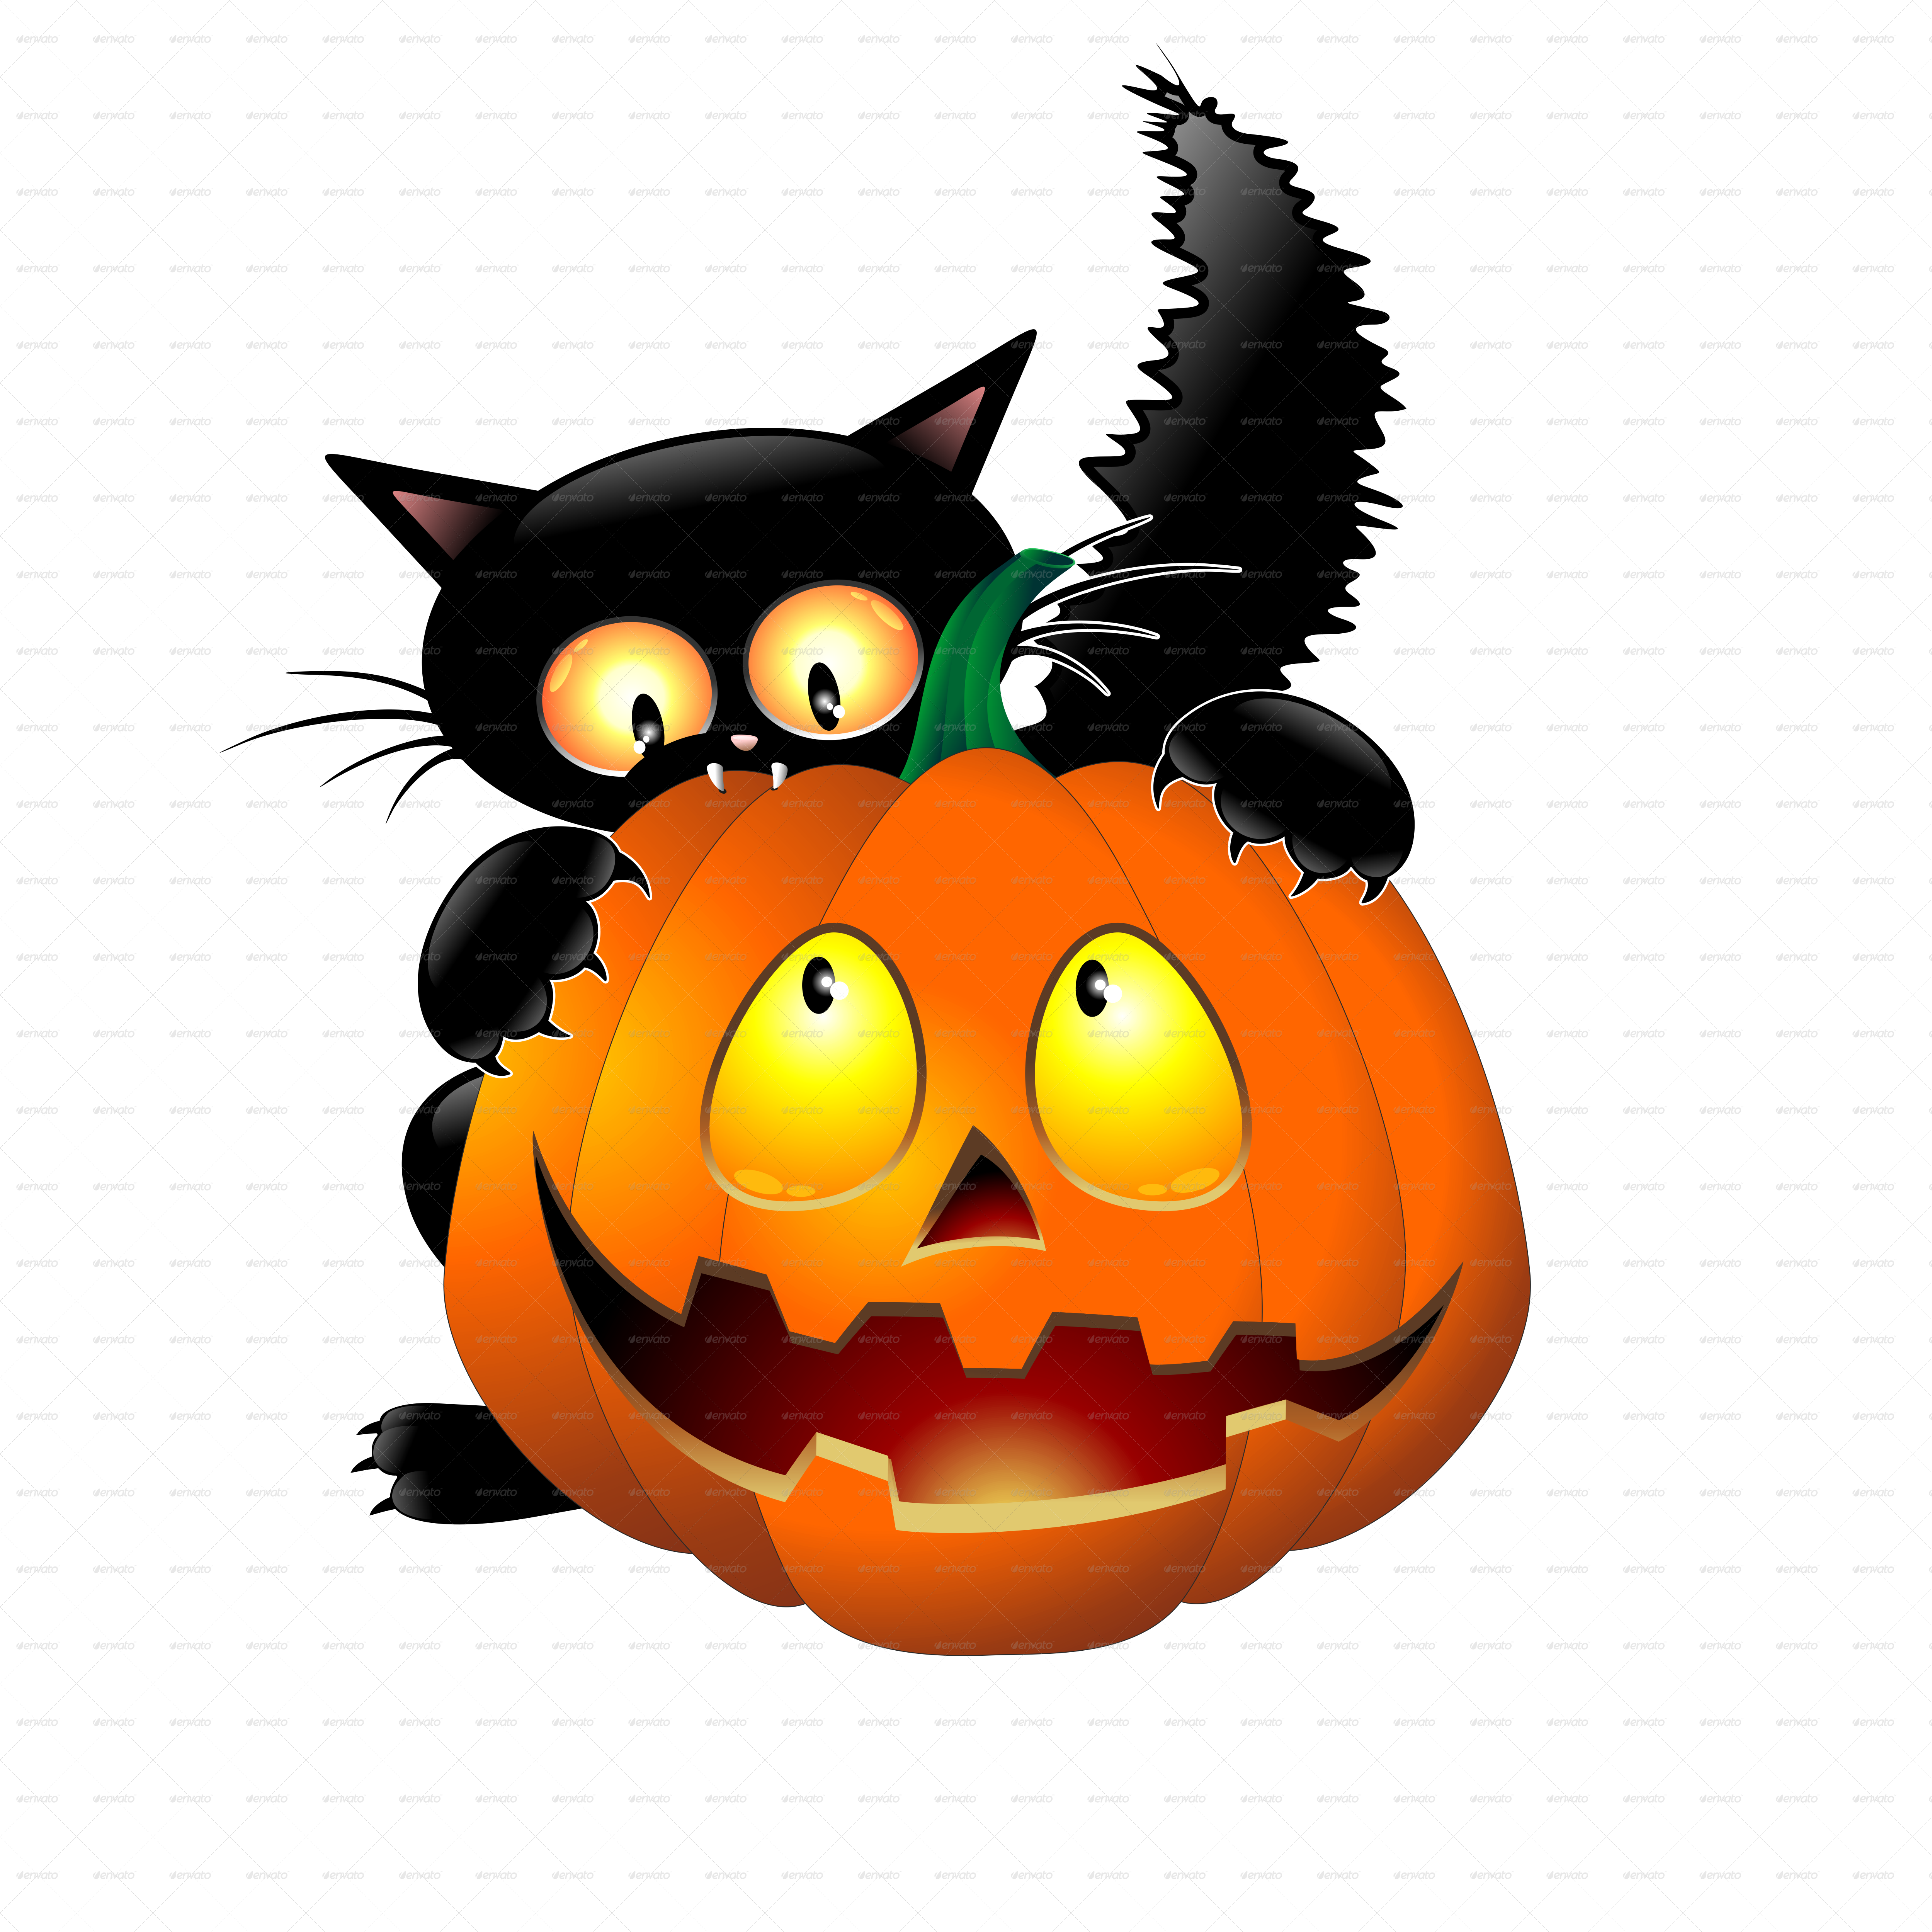 Black Catand Jack O Lantern Halloween